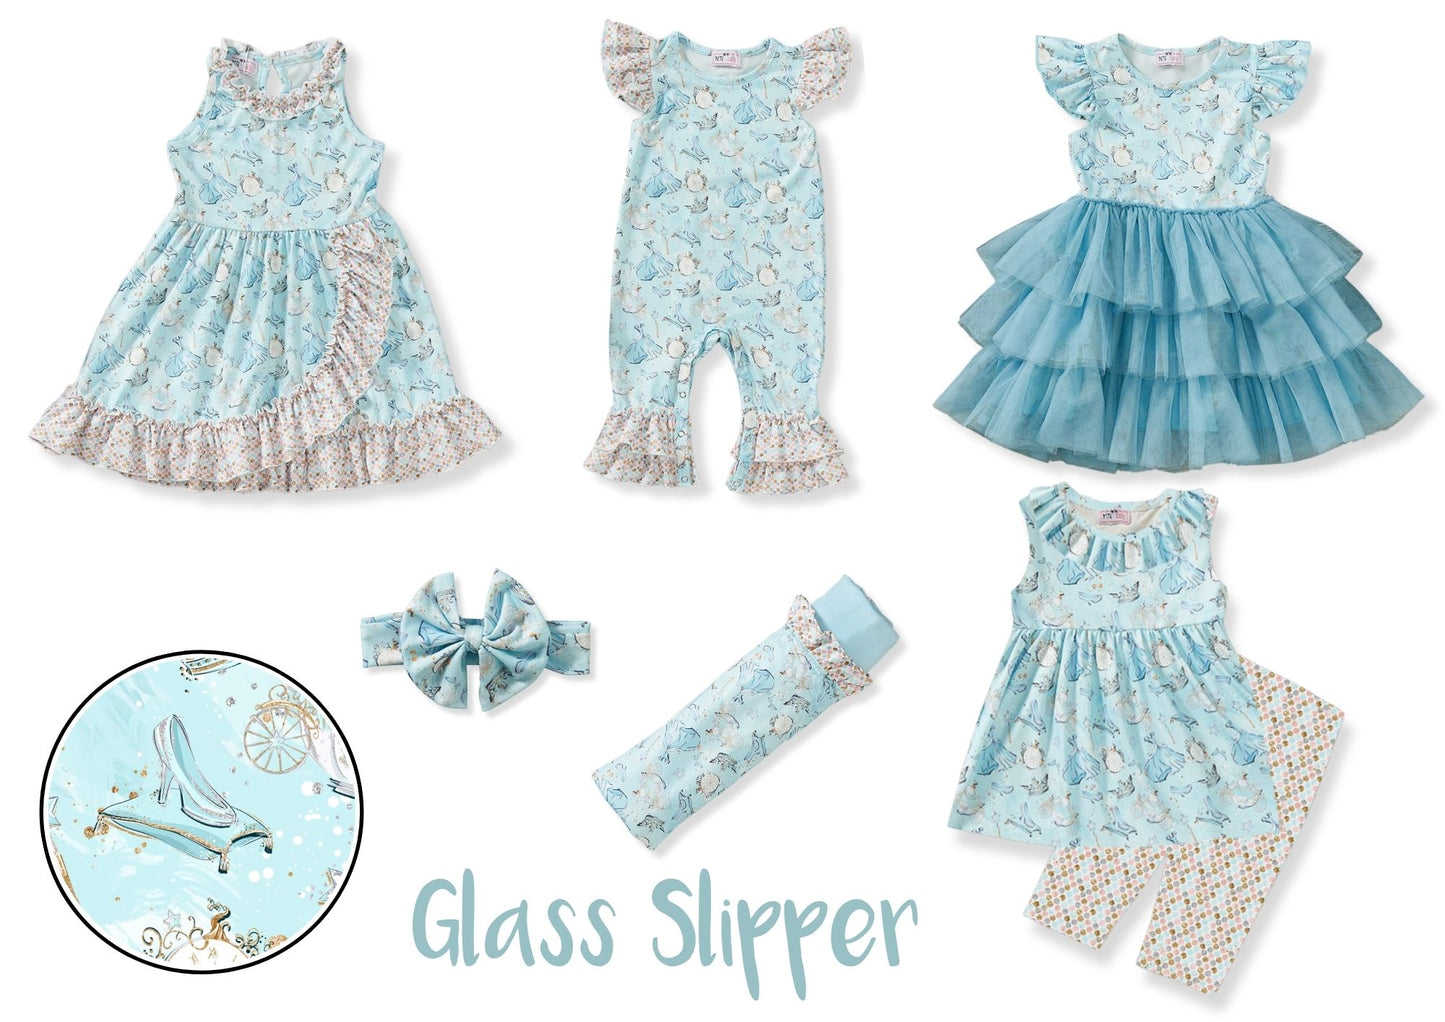 Glass Slipper Dress